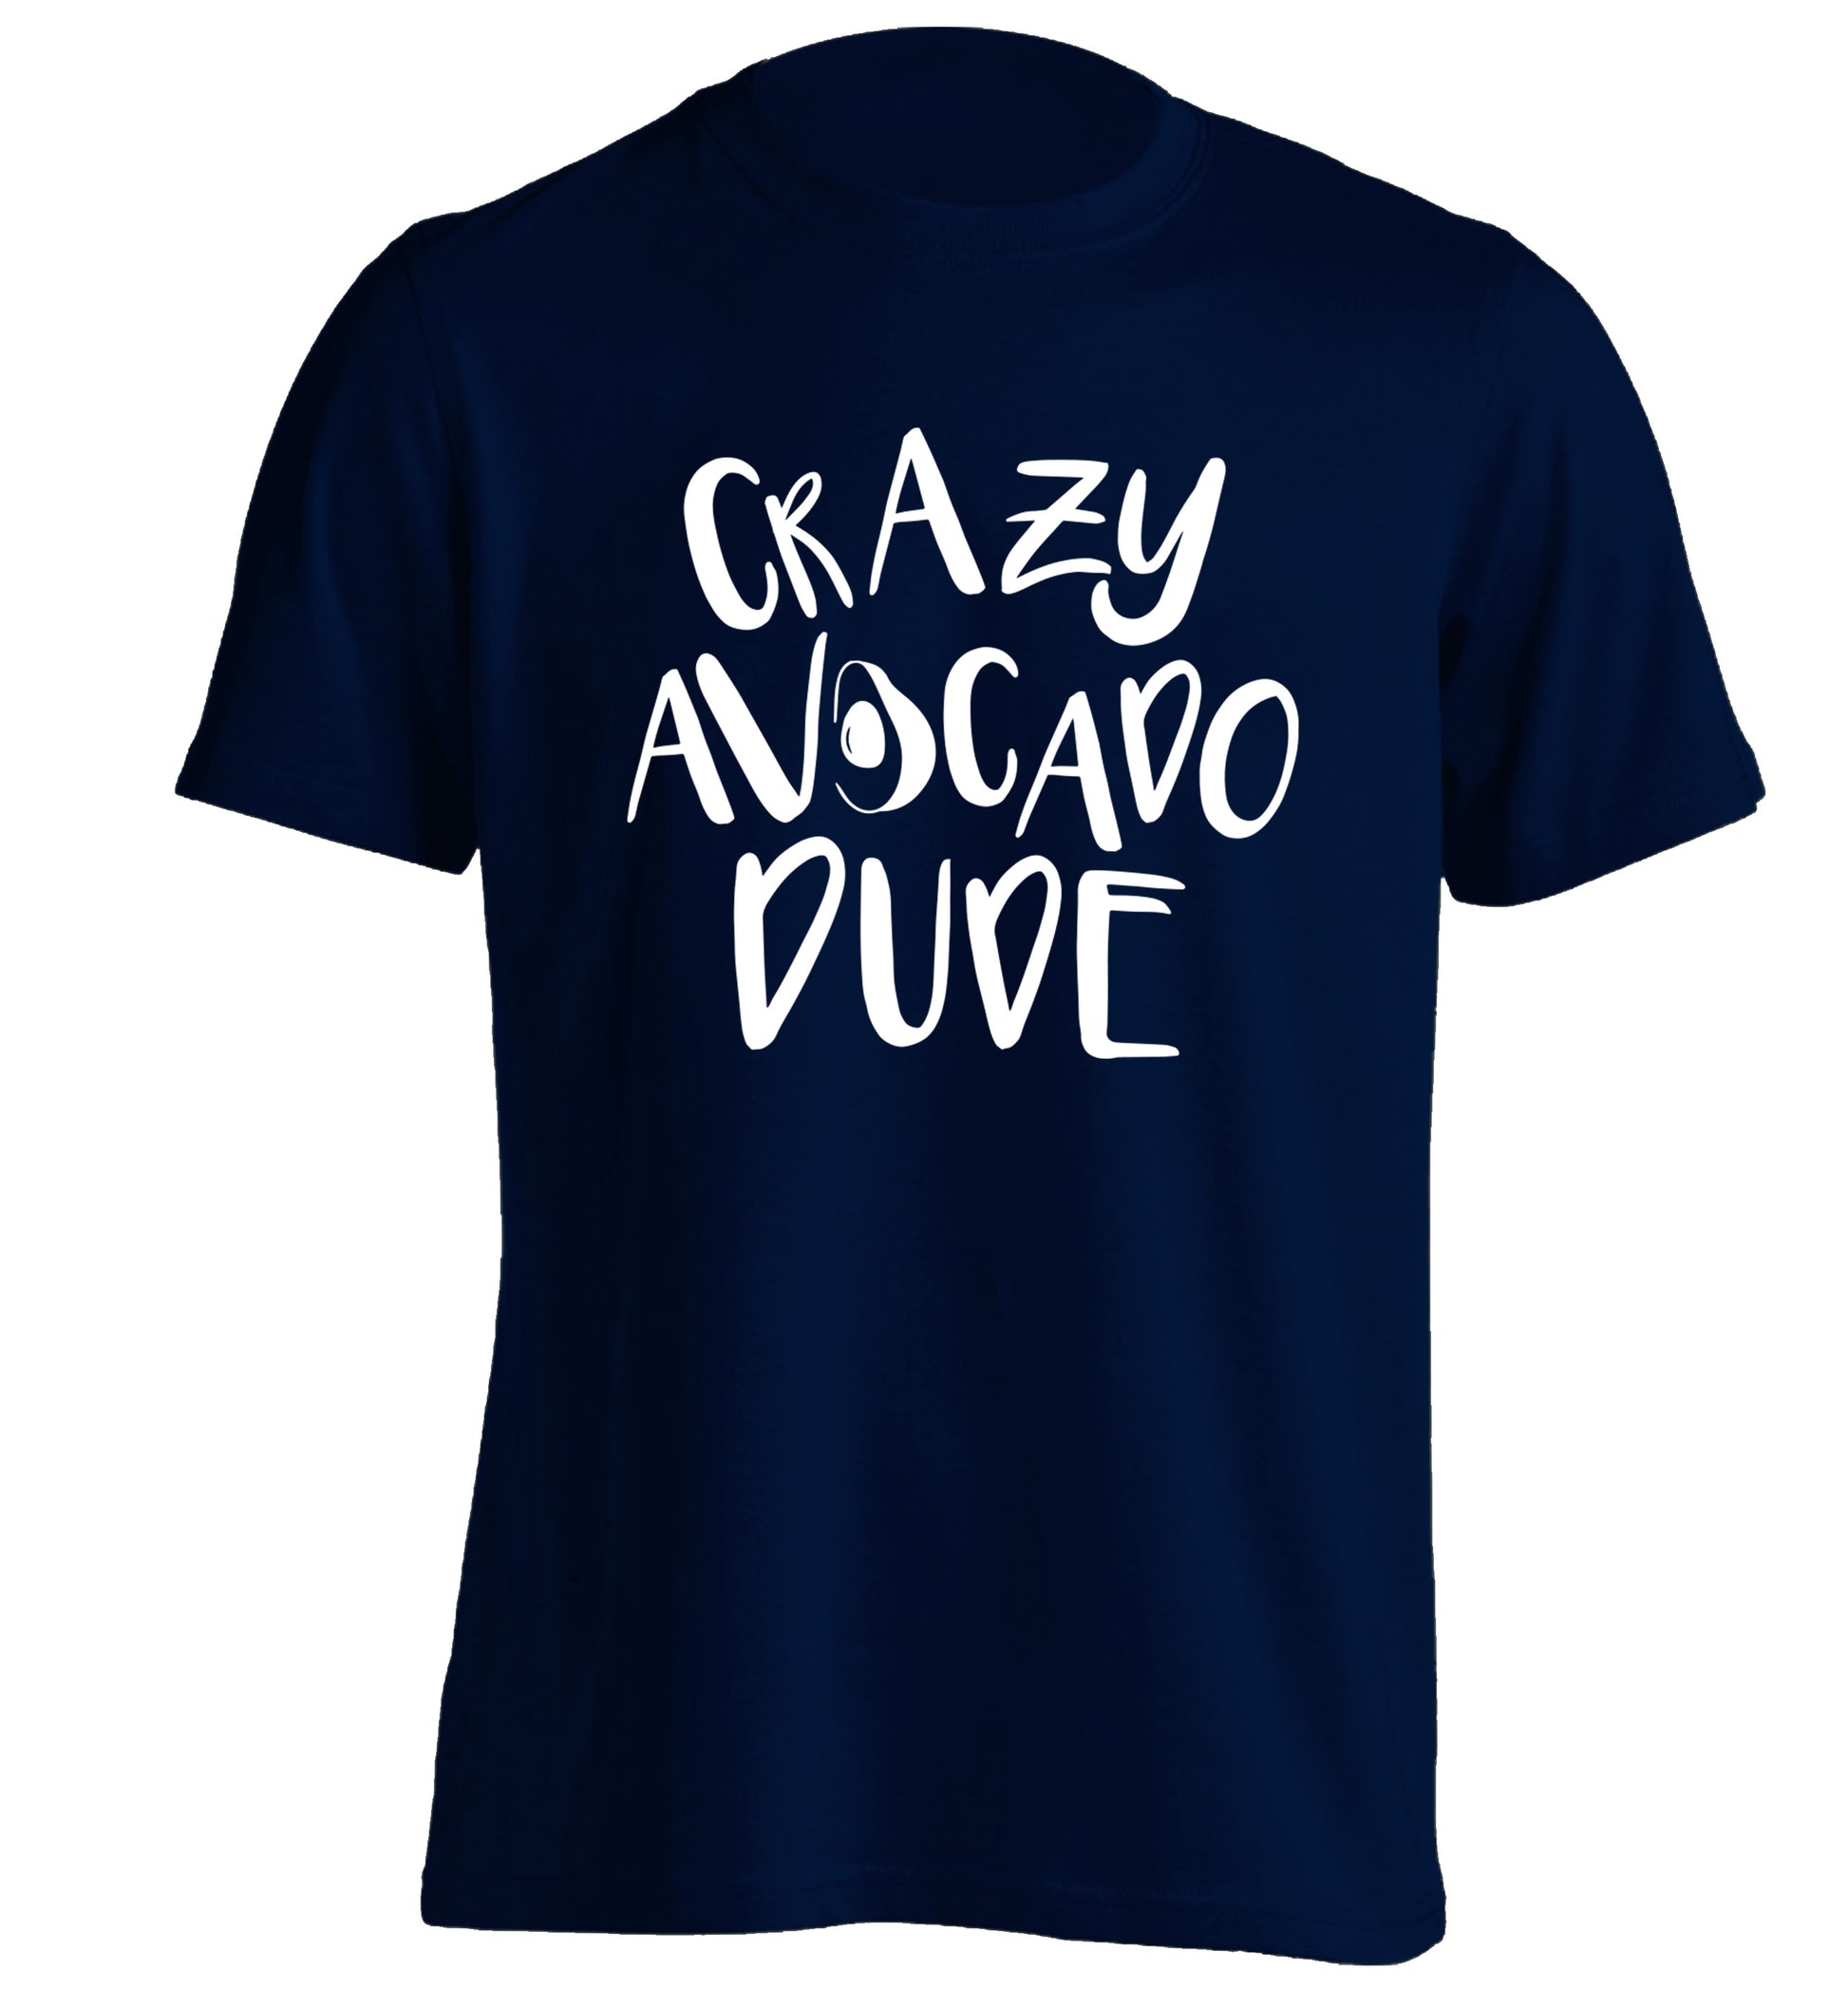 Crazy avocado dude adults unisex navy Tshirt 2XL